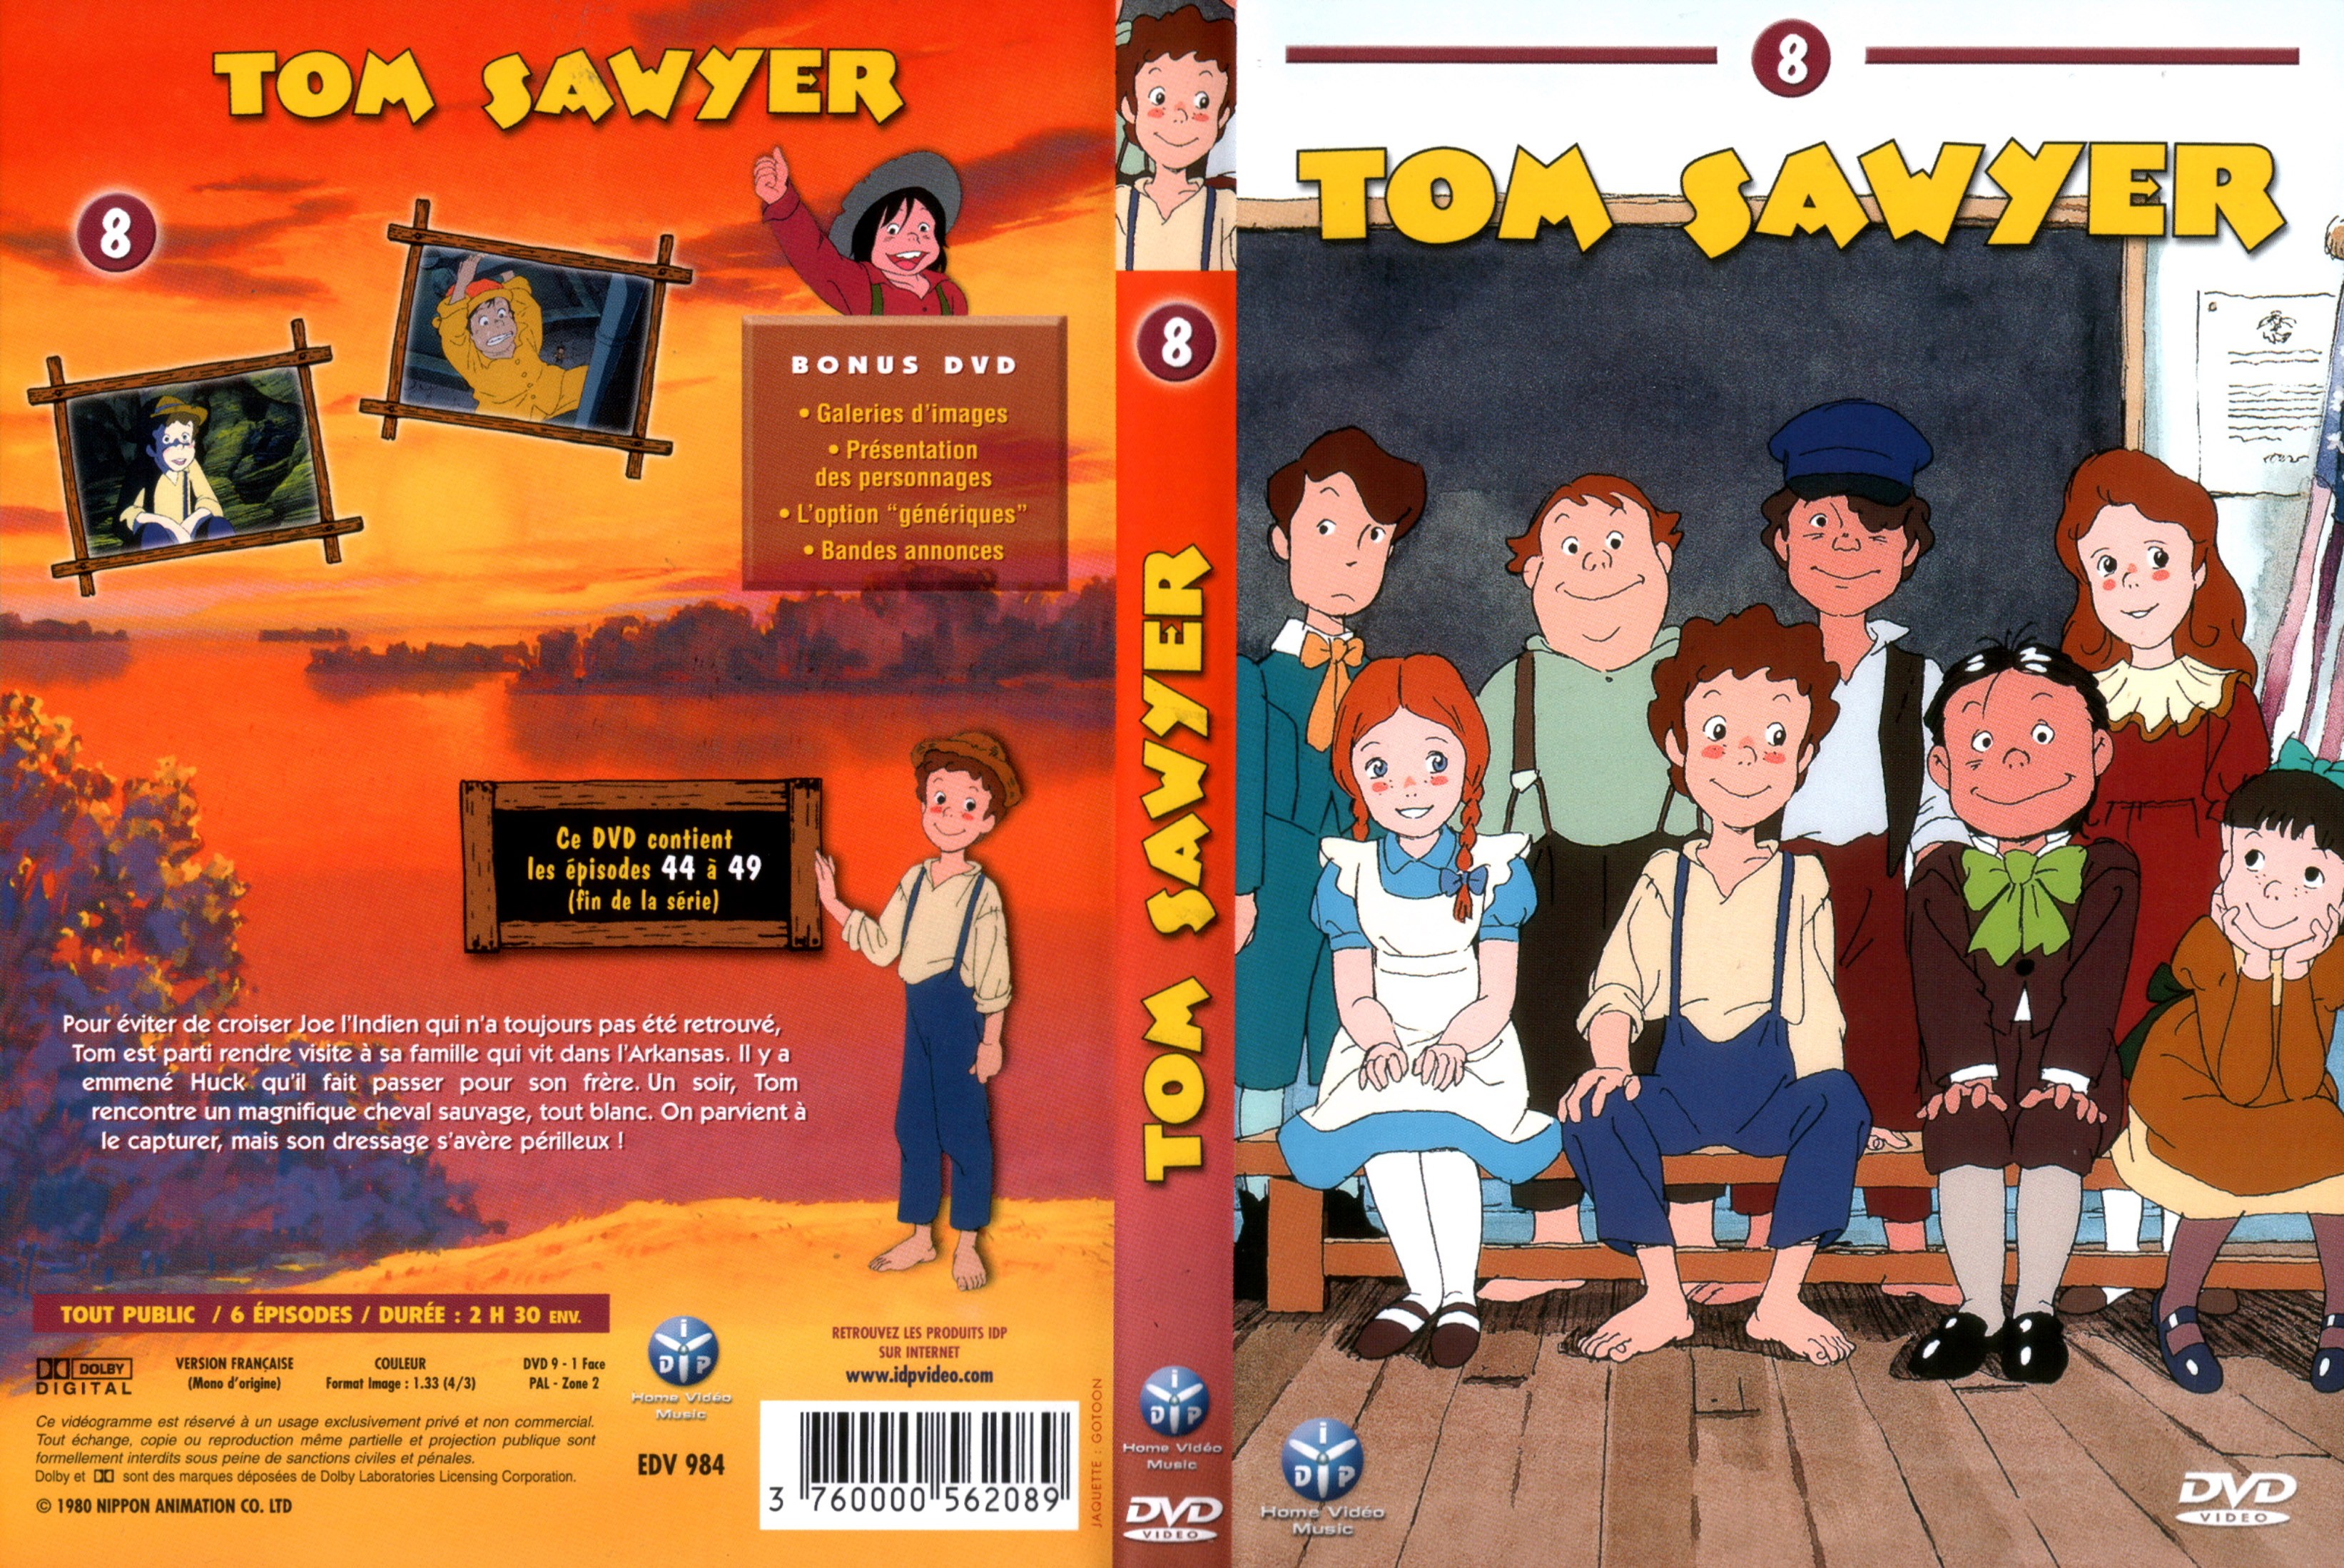 Jaquette DVD Tom Sawyer vol 8